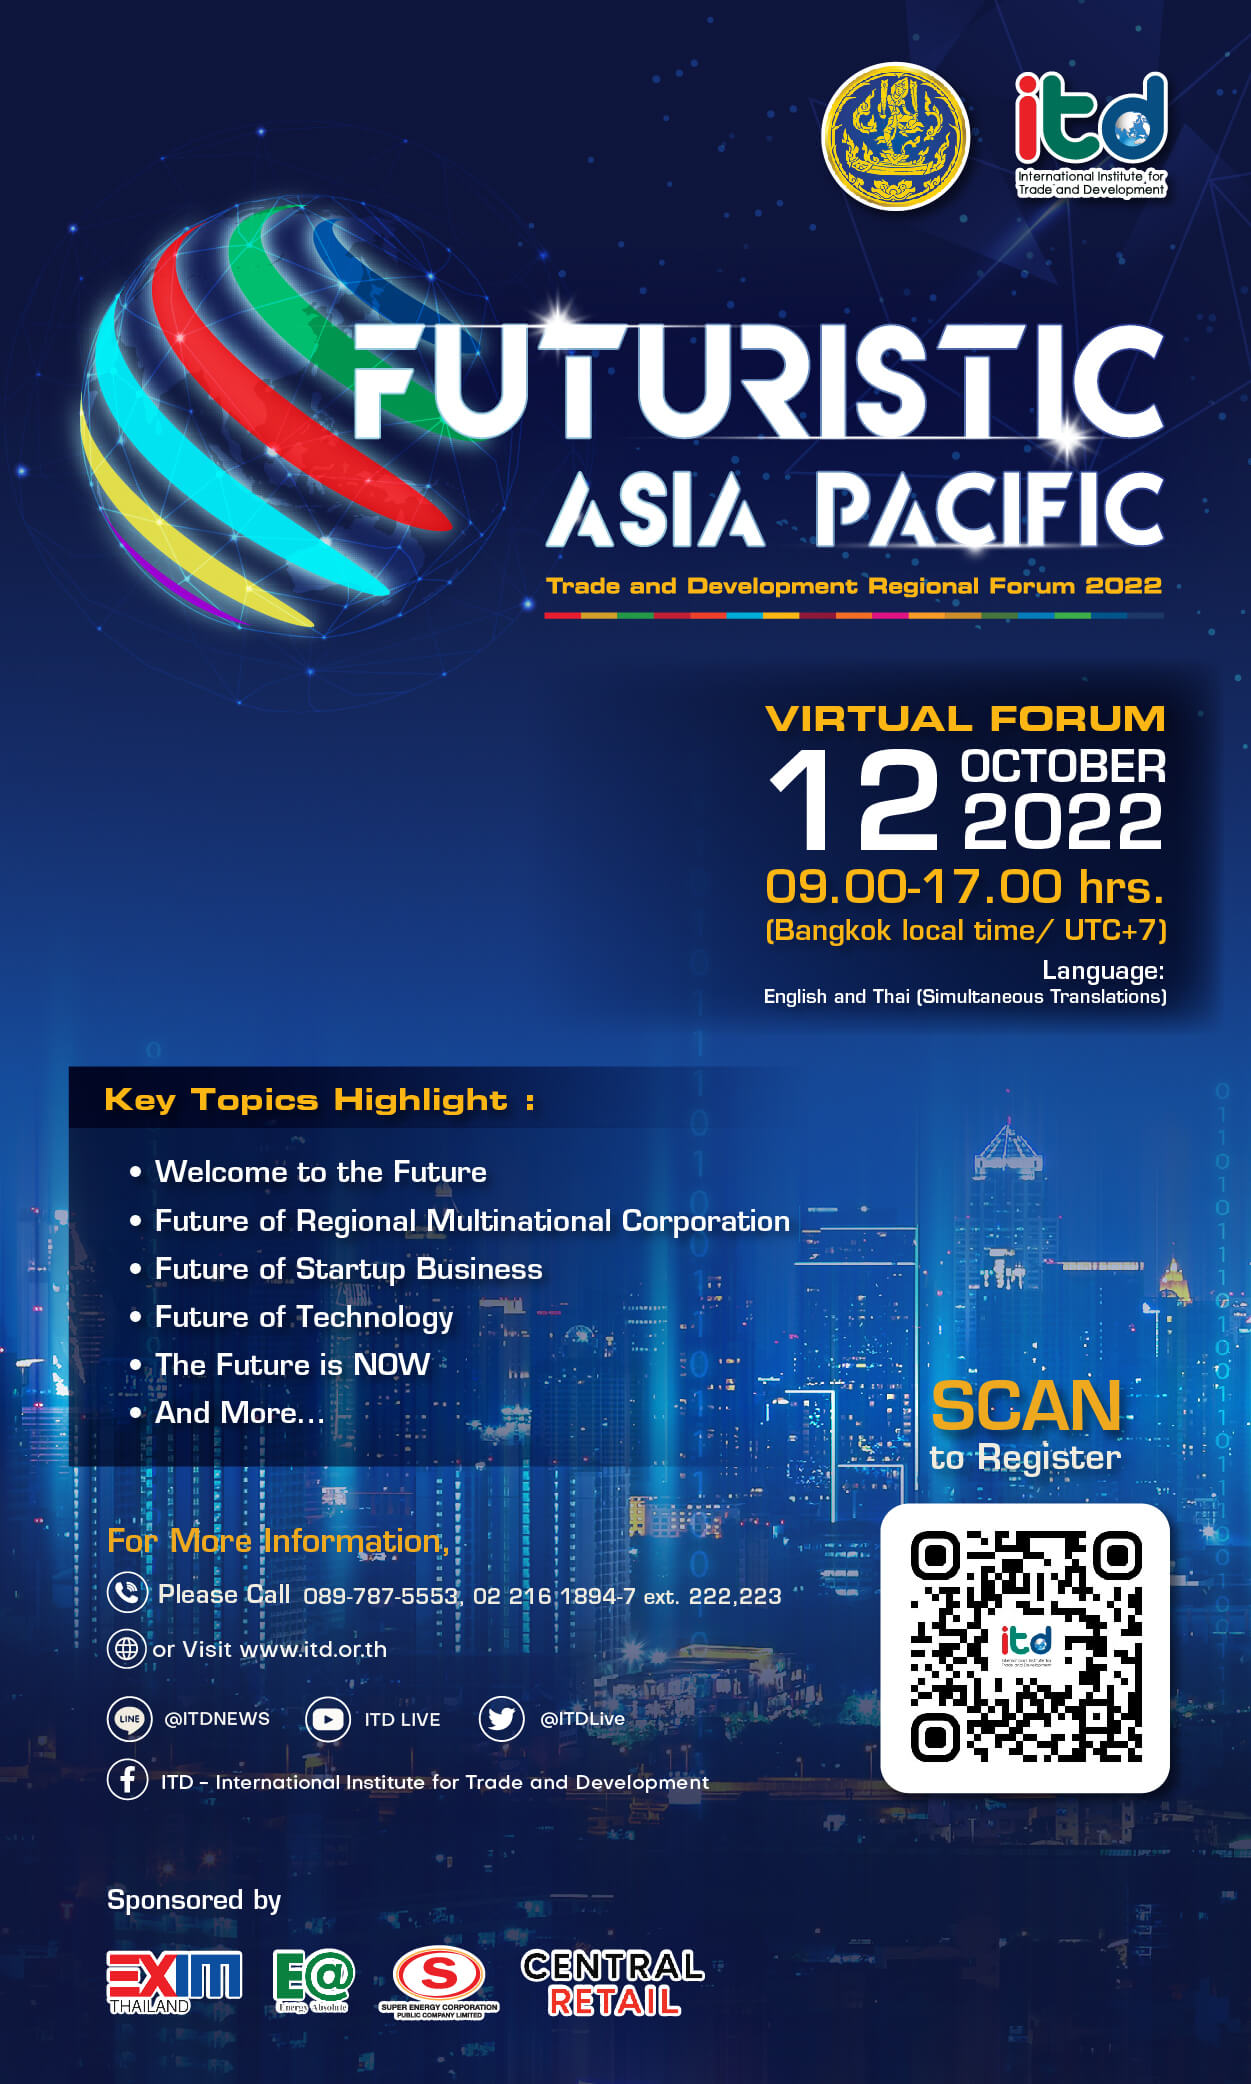 Trade and Development Regional Forum 2022 “Futuristic Asia-Pacific”